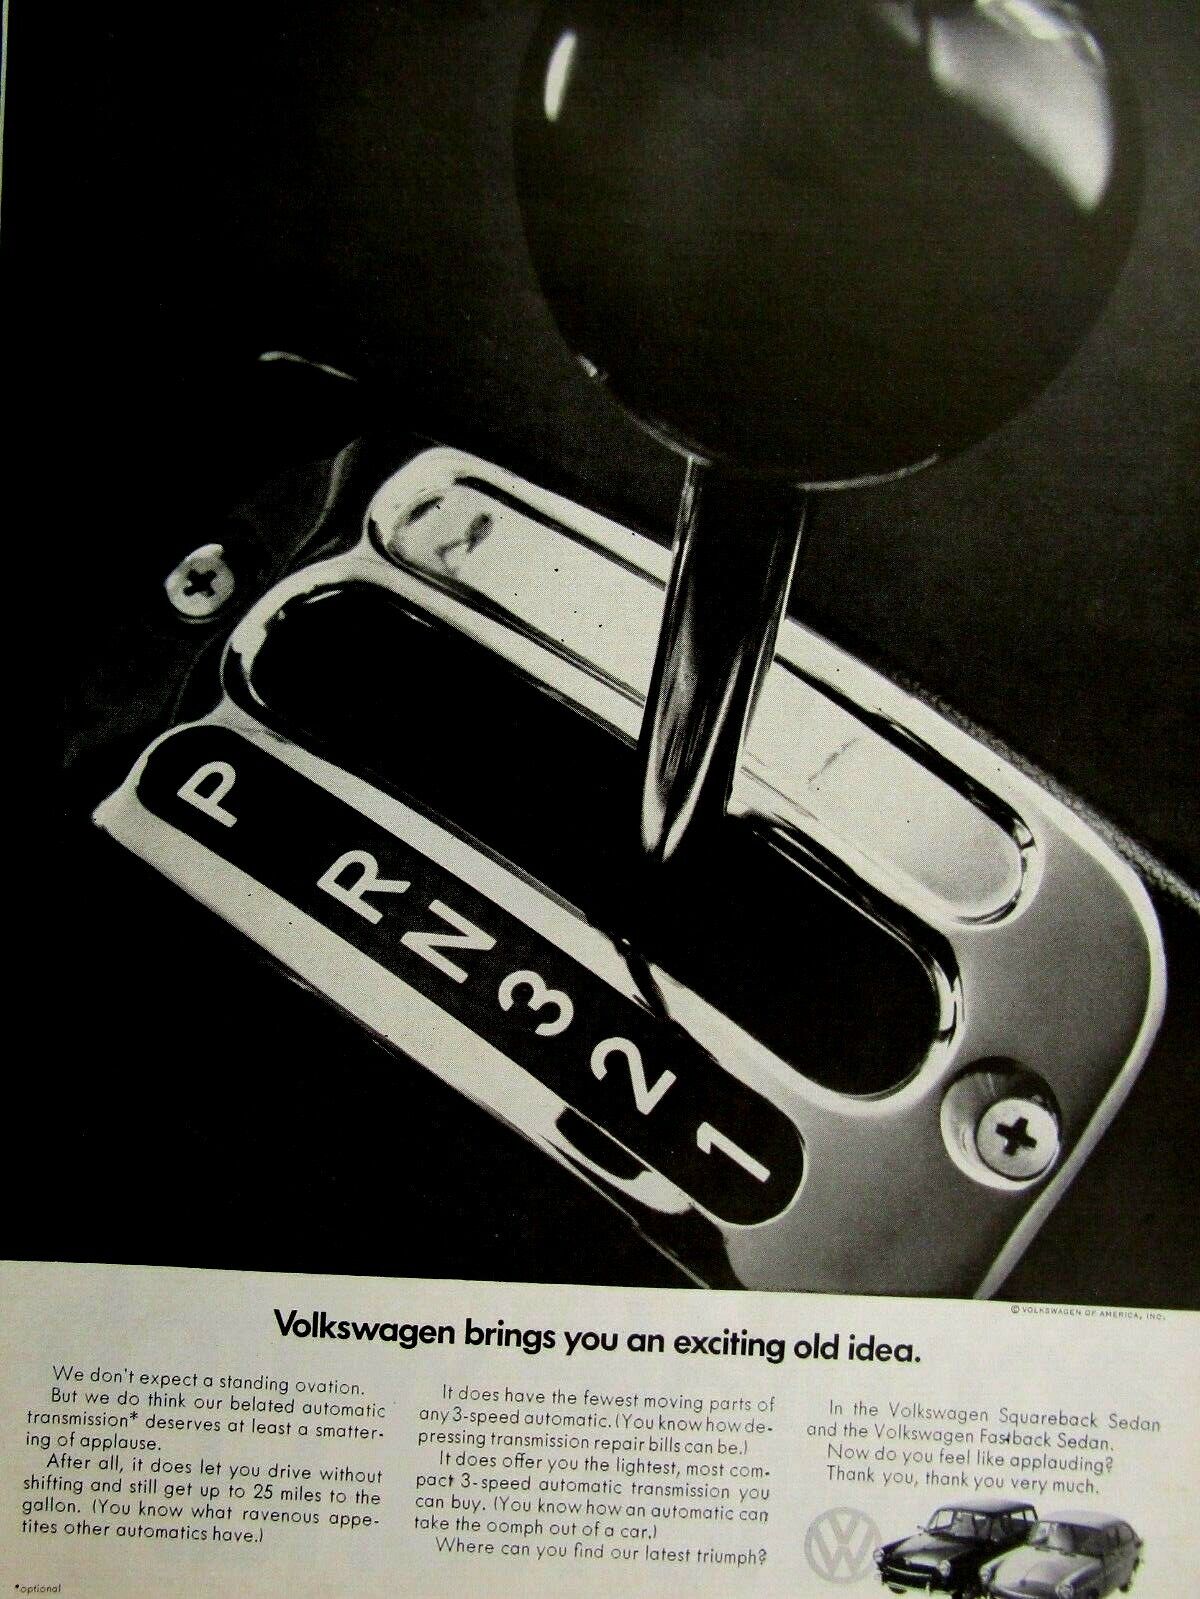 1969 Volkswagen Square & Fastback Exciting old idea Original Print Ad 8.5 x 11